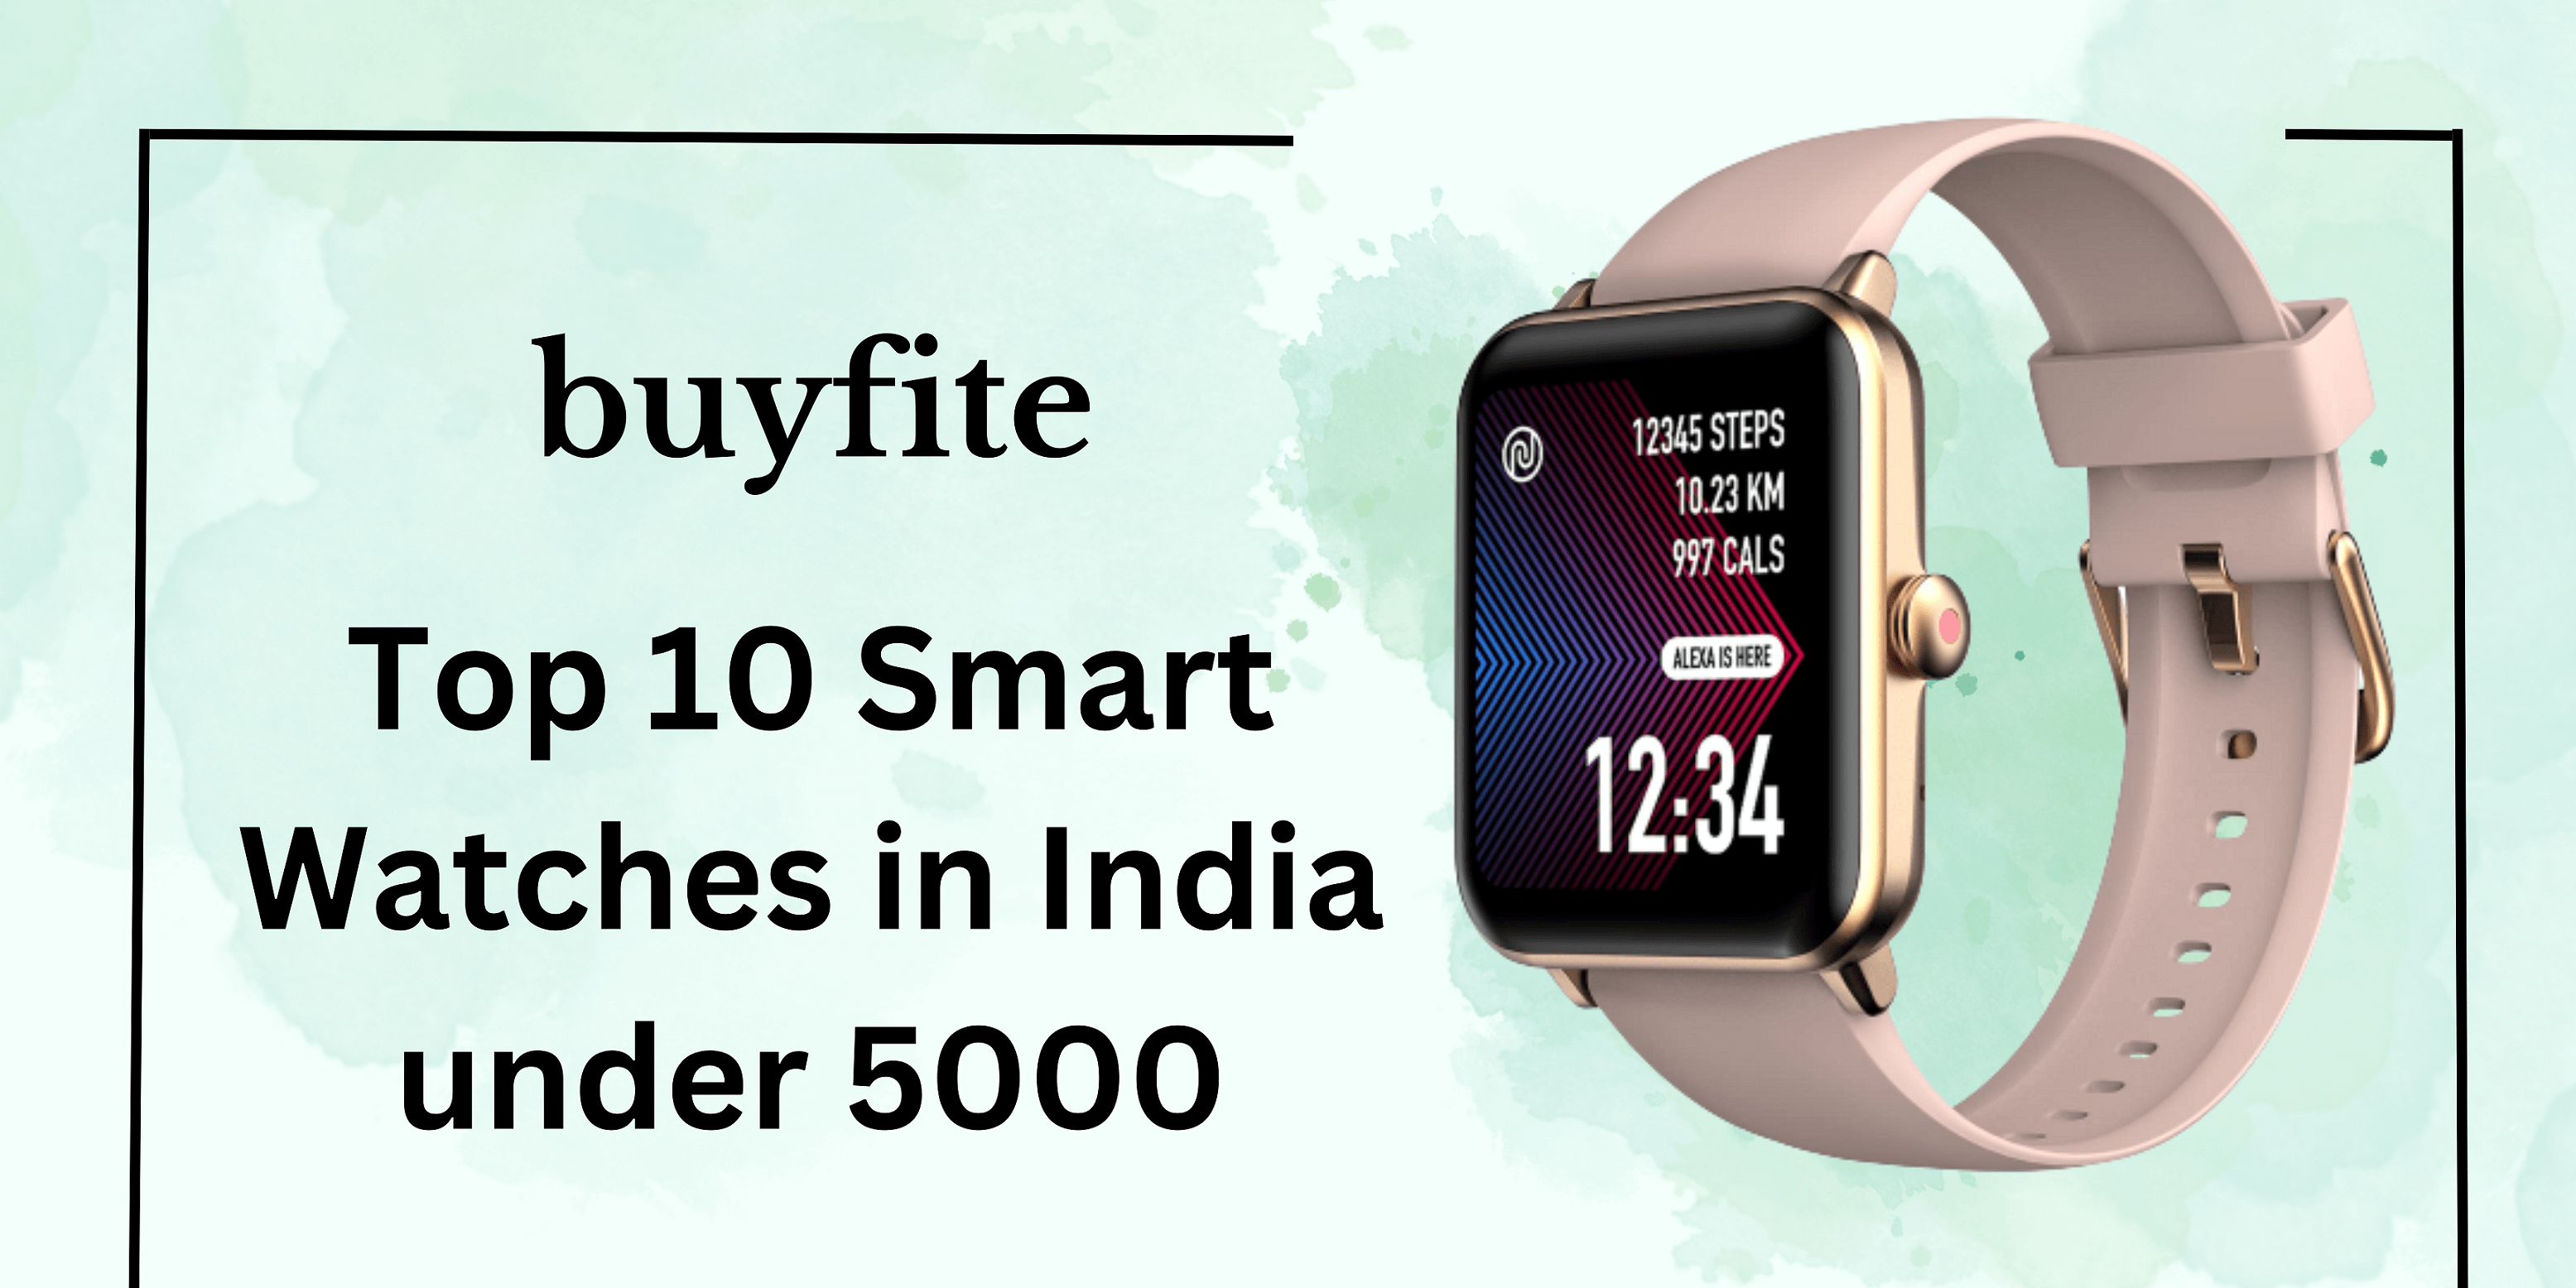 Top 10 Smart Watches in India under 5000 - buyfite